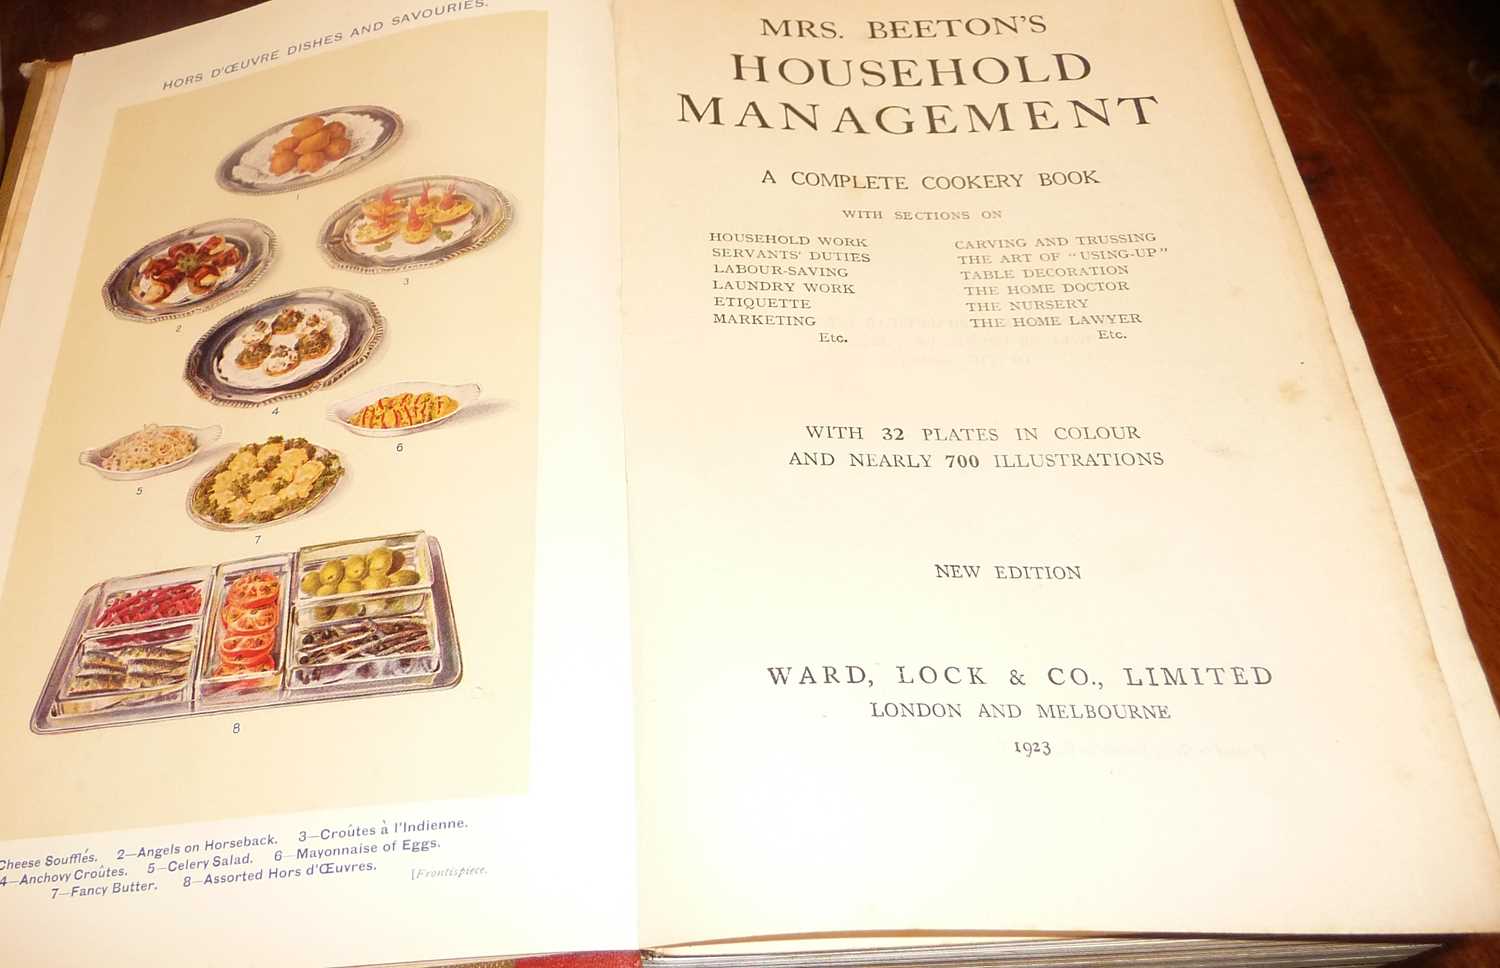 Mrs Beeton's Household Management 1923 - Image 2 of 4